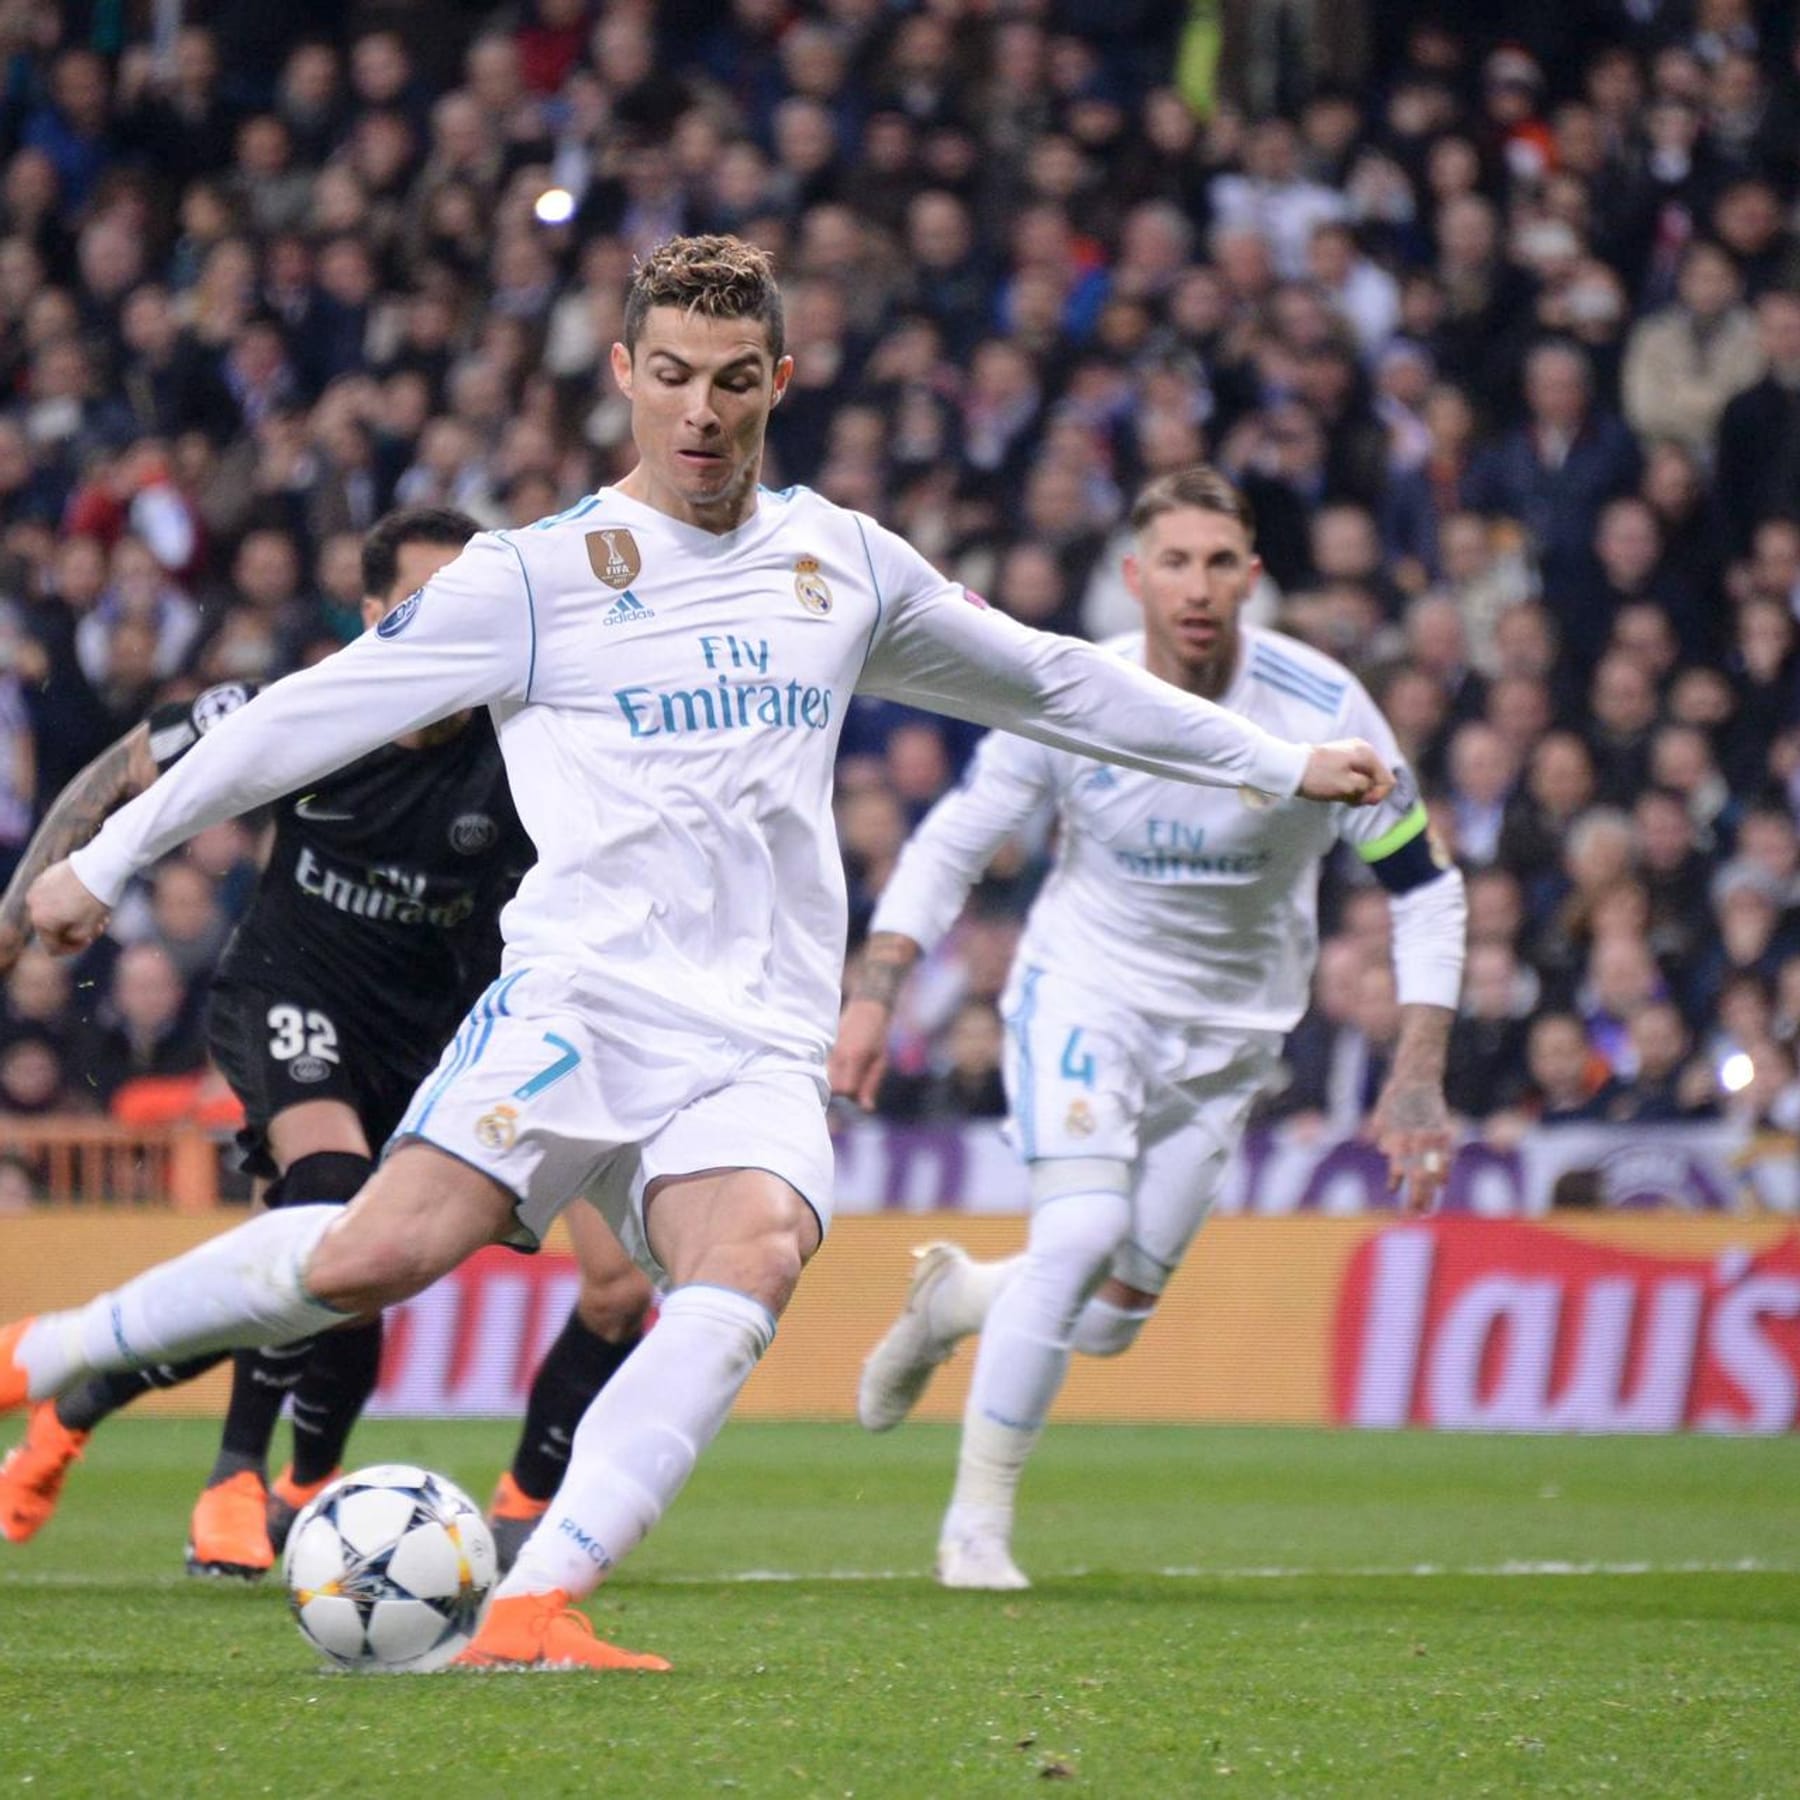 Cristiano Ronaldo narrte Paris mit verbotenem Elfmeter-Trick